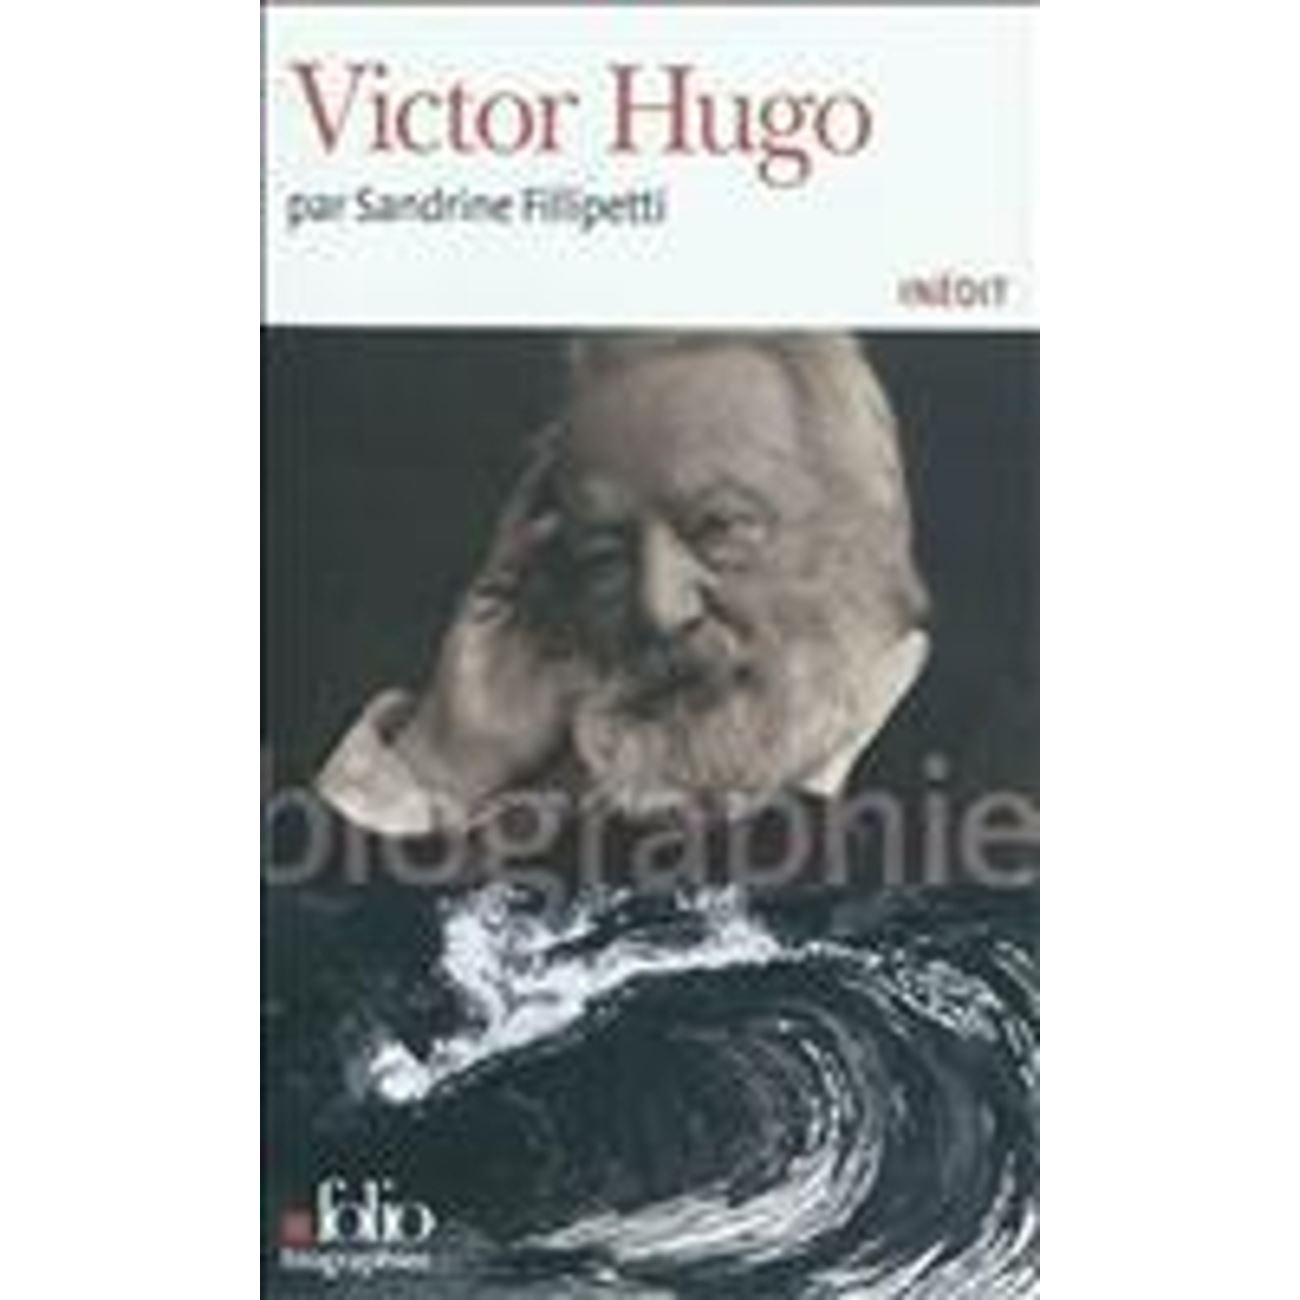 victor hugo biography book